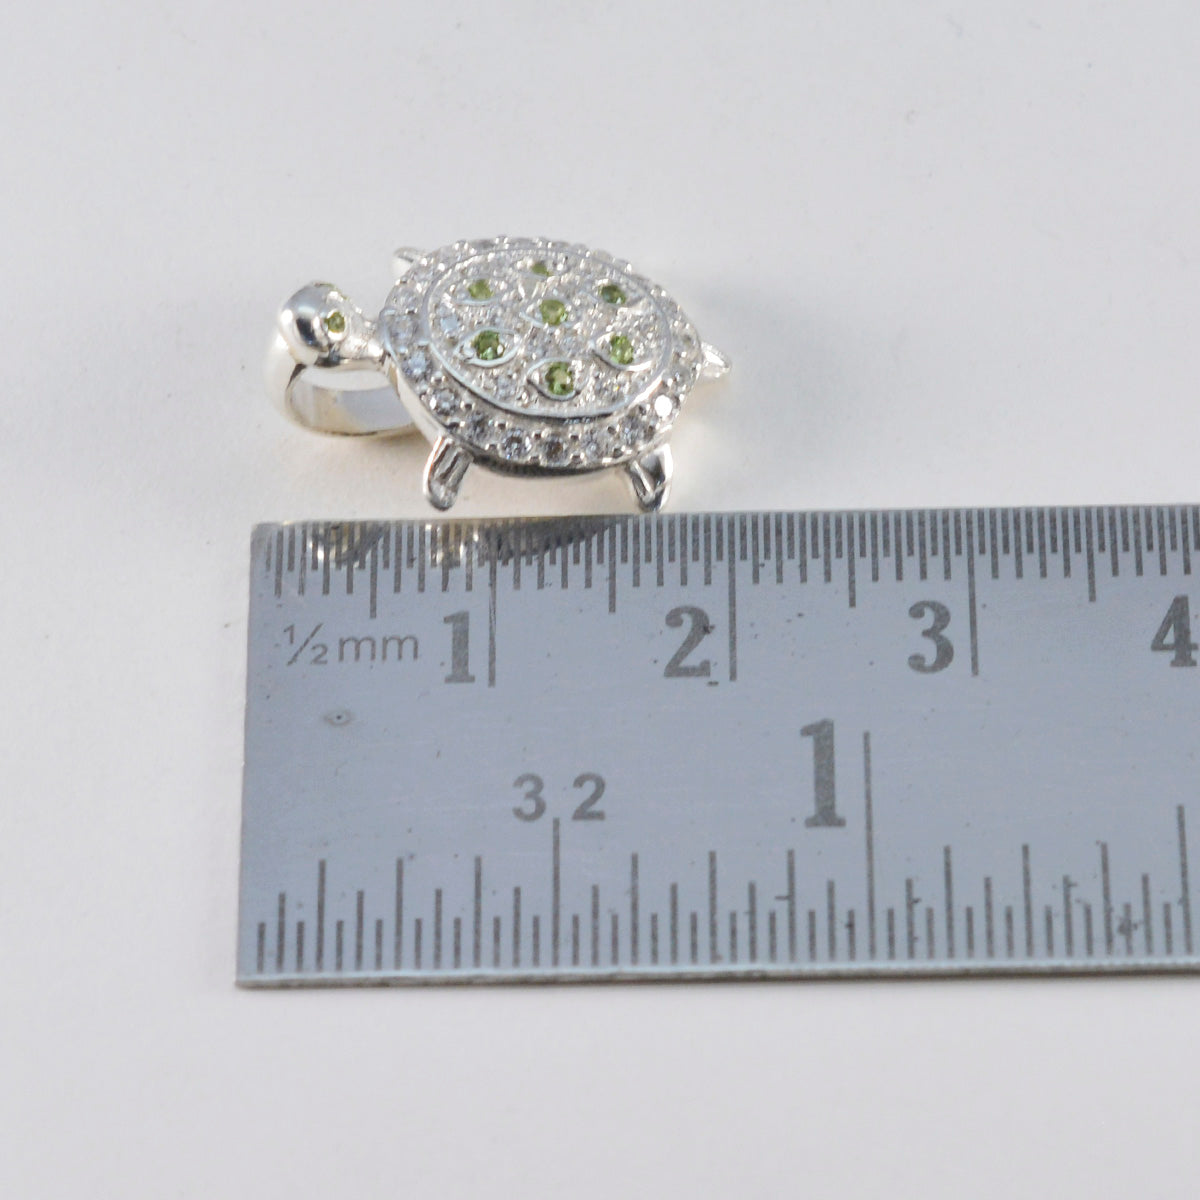 Riyo Stunning Gemstone Round Faceted Green Peridot 1153 Sterling Silver Pendant Gift For Birthday